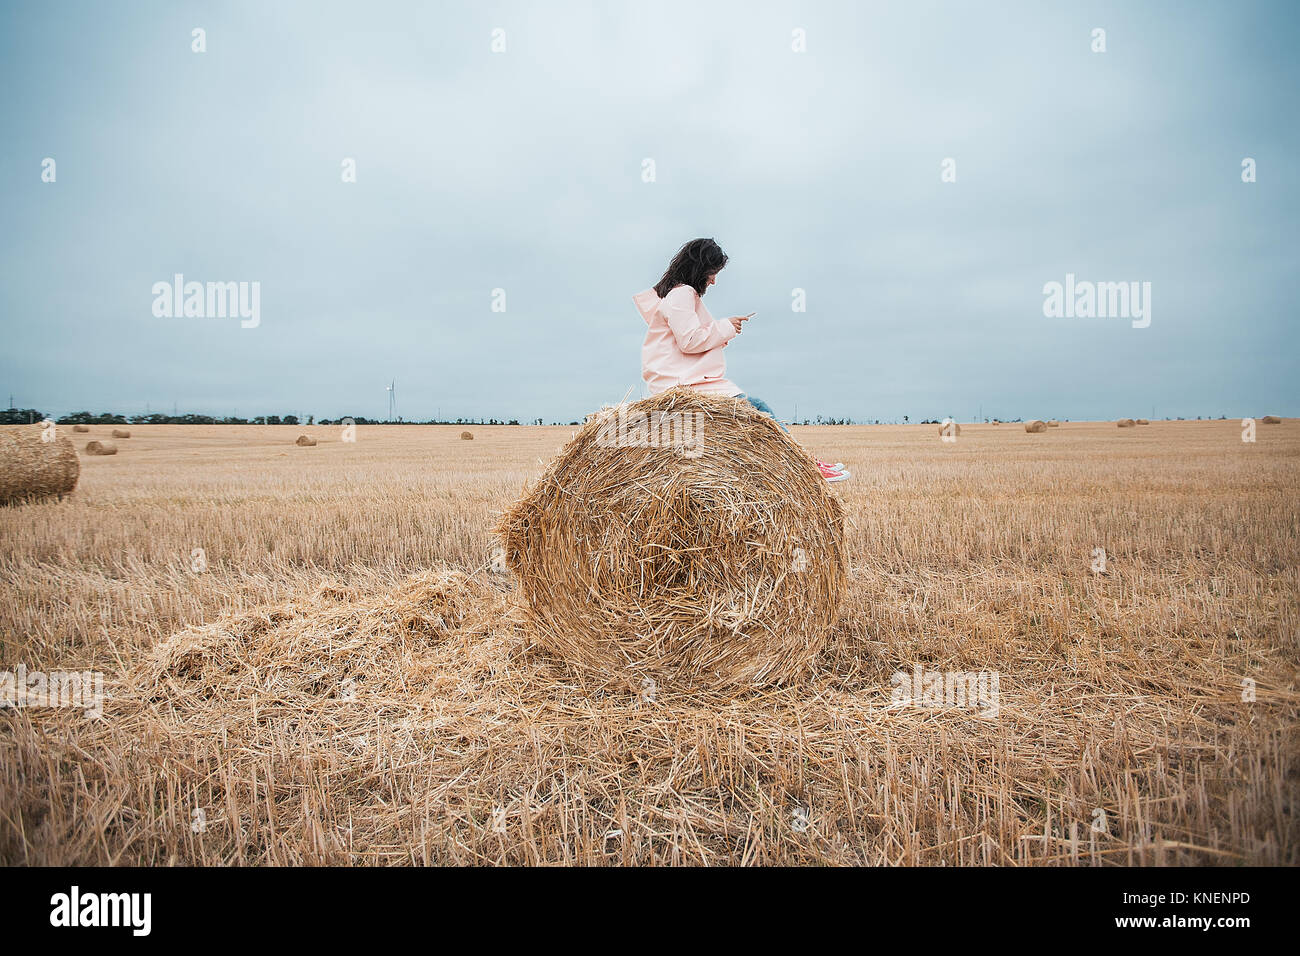 Woman in raincoat on hay bale, Odessa, Ukraine Stock Photo